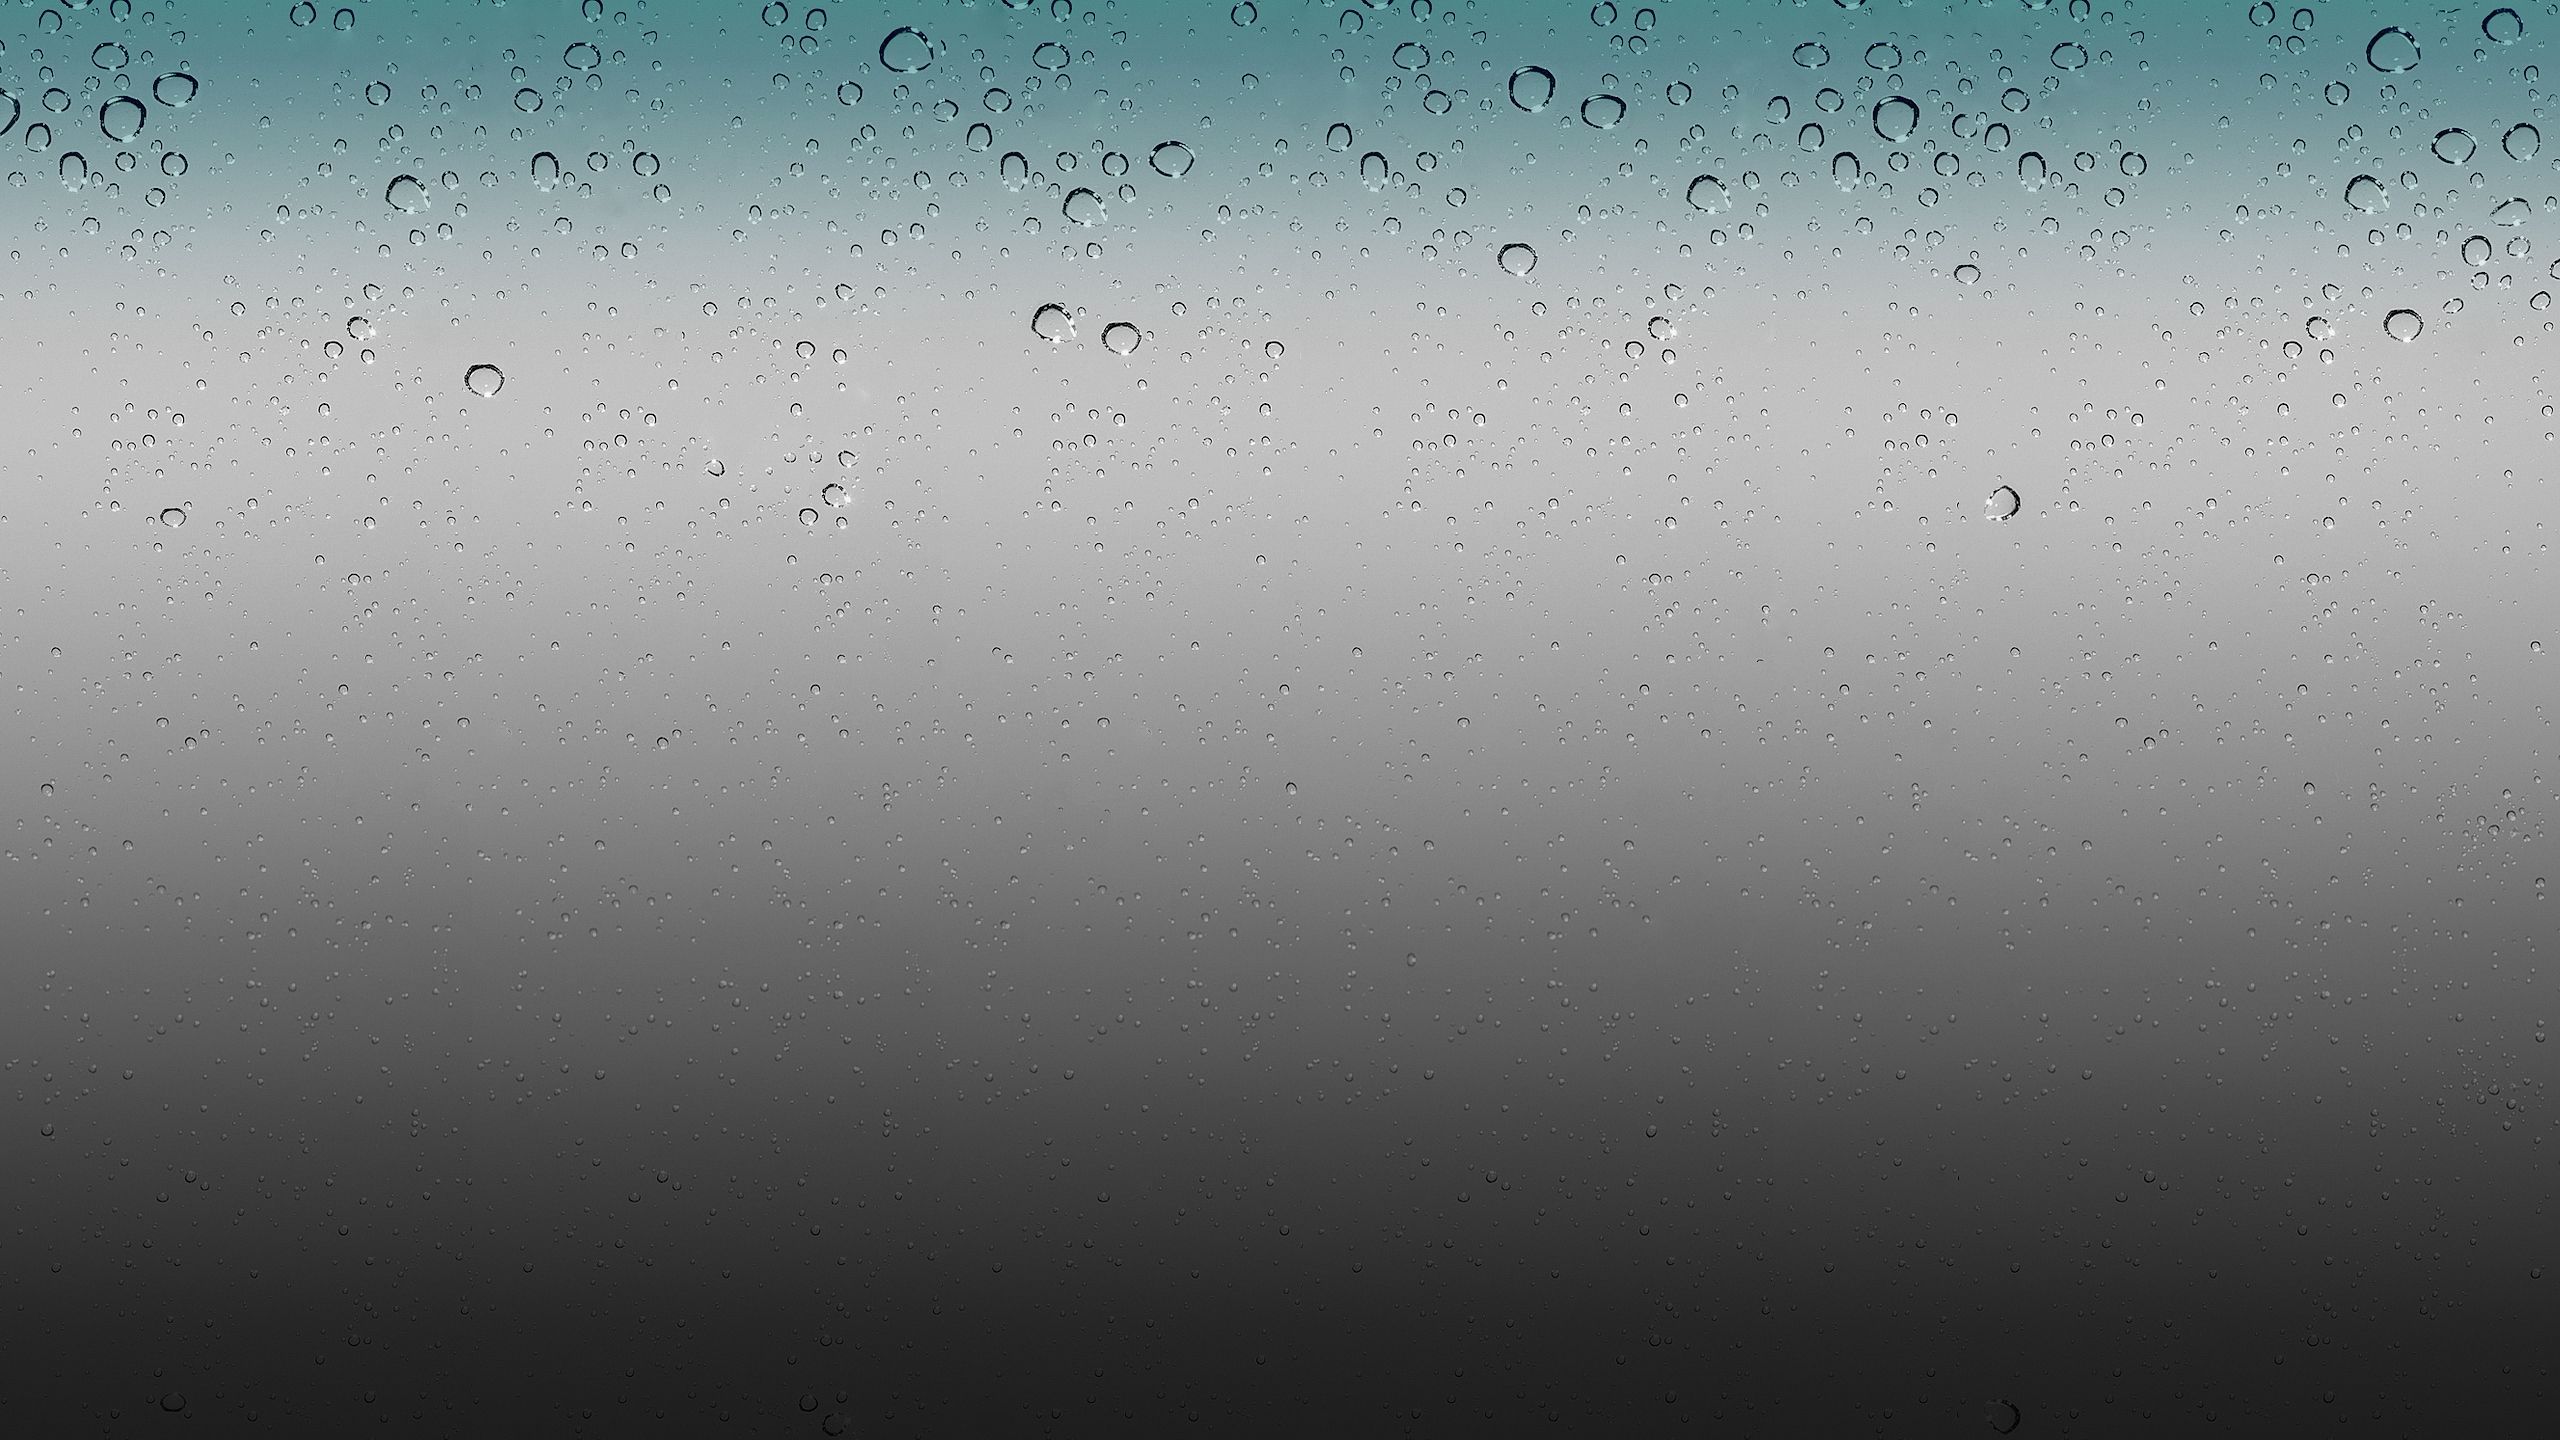 IOS Rain Drops Wallpaper HD By Airplane by 0BurN0 on DeviantArt